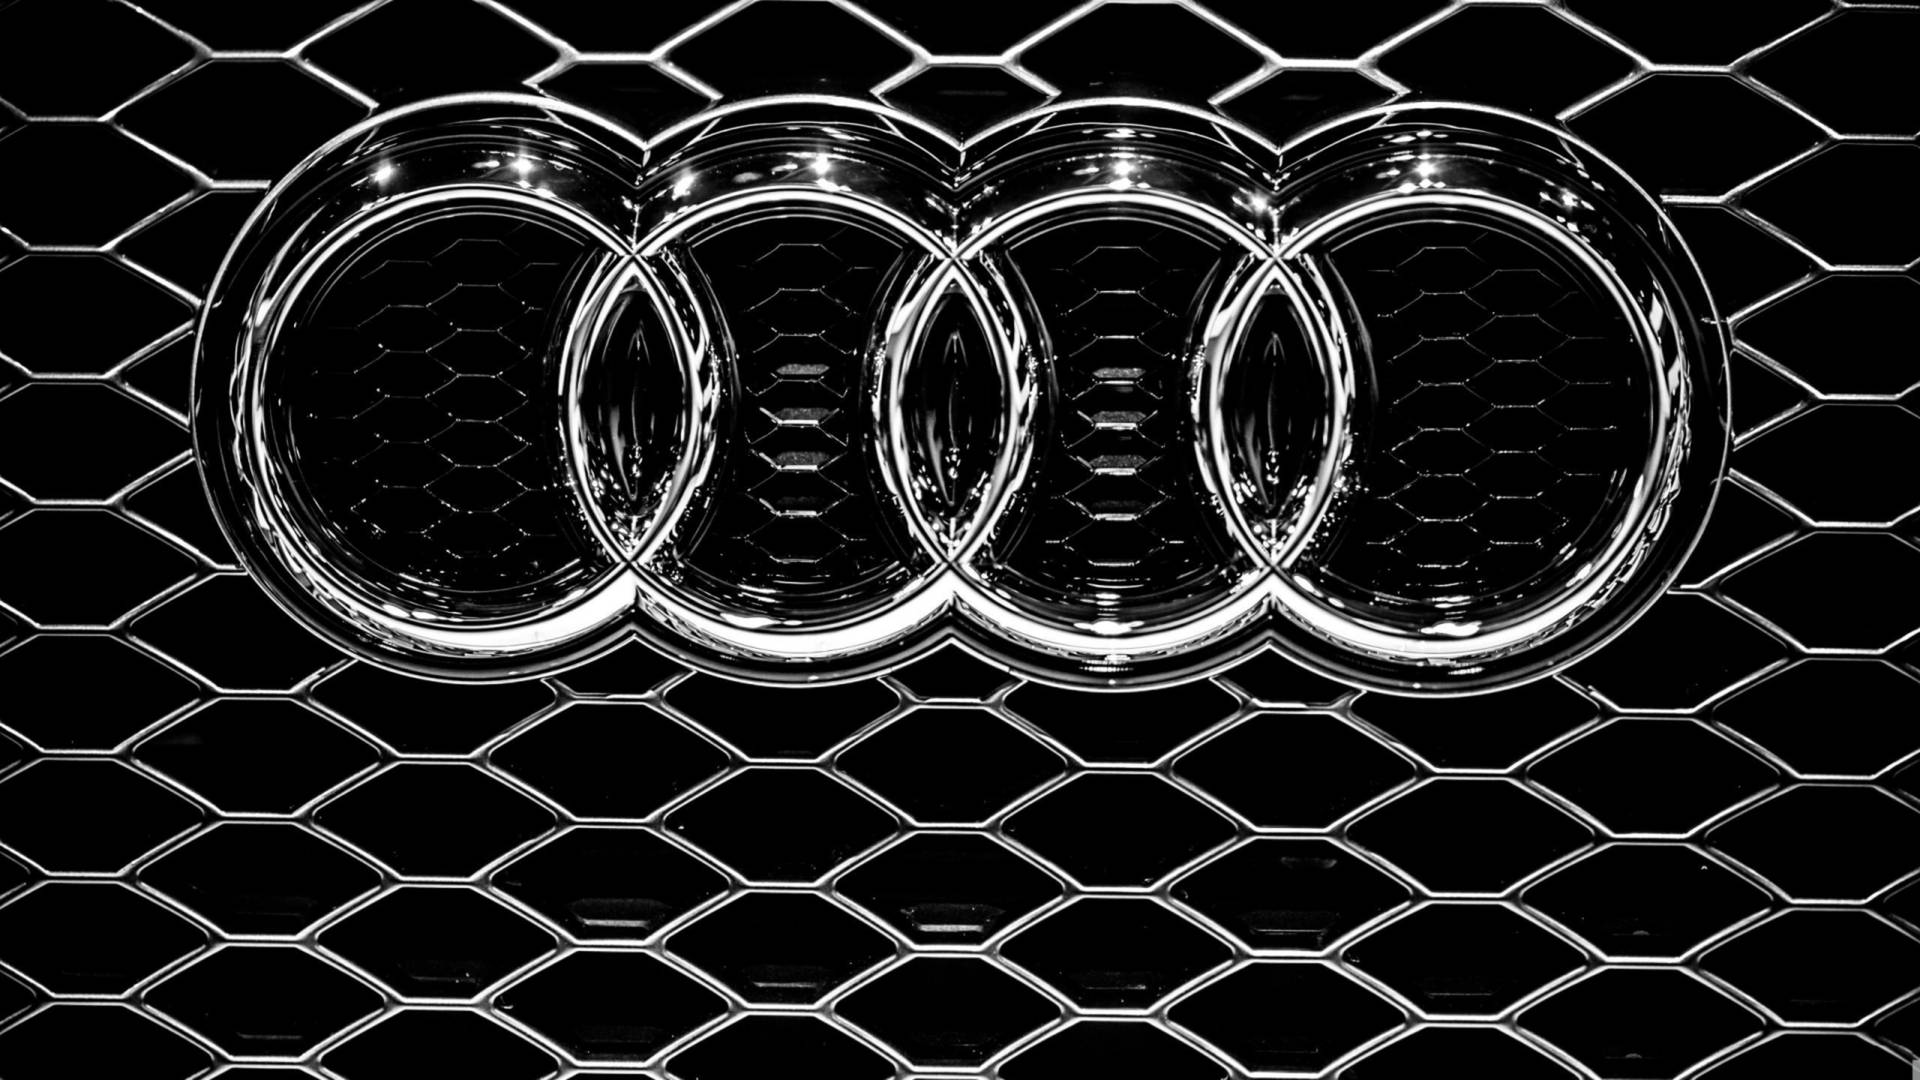 Silver Audi Car Emblem In Solid Black